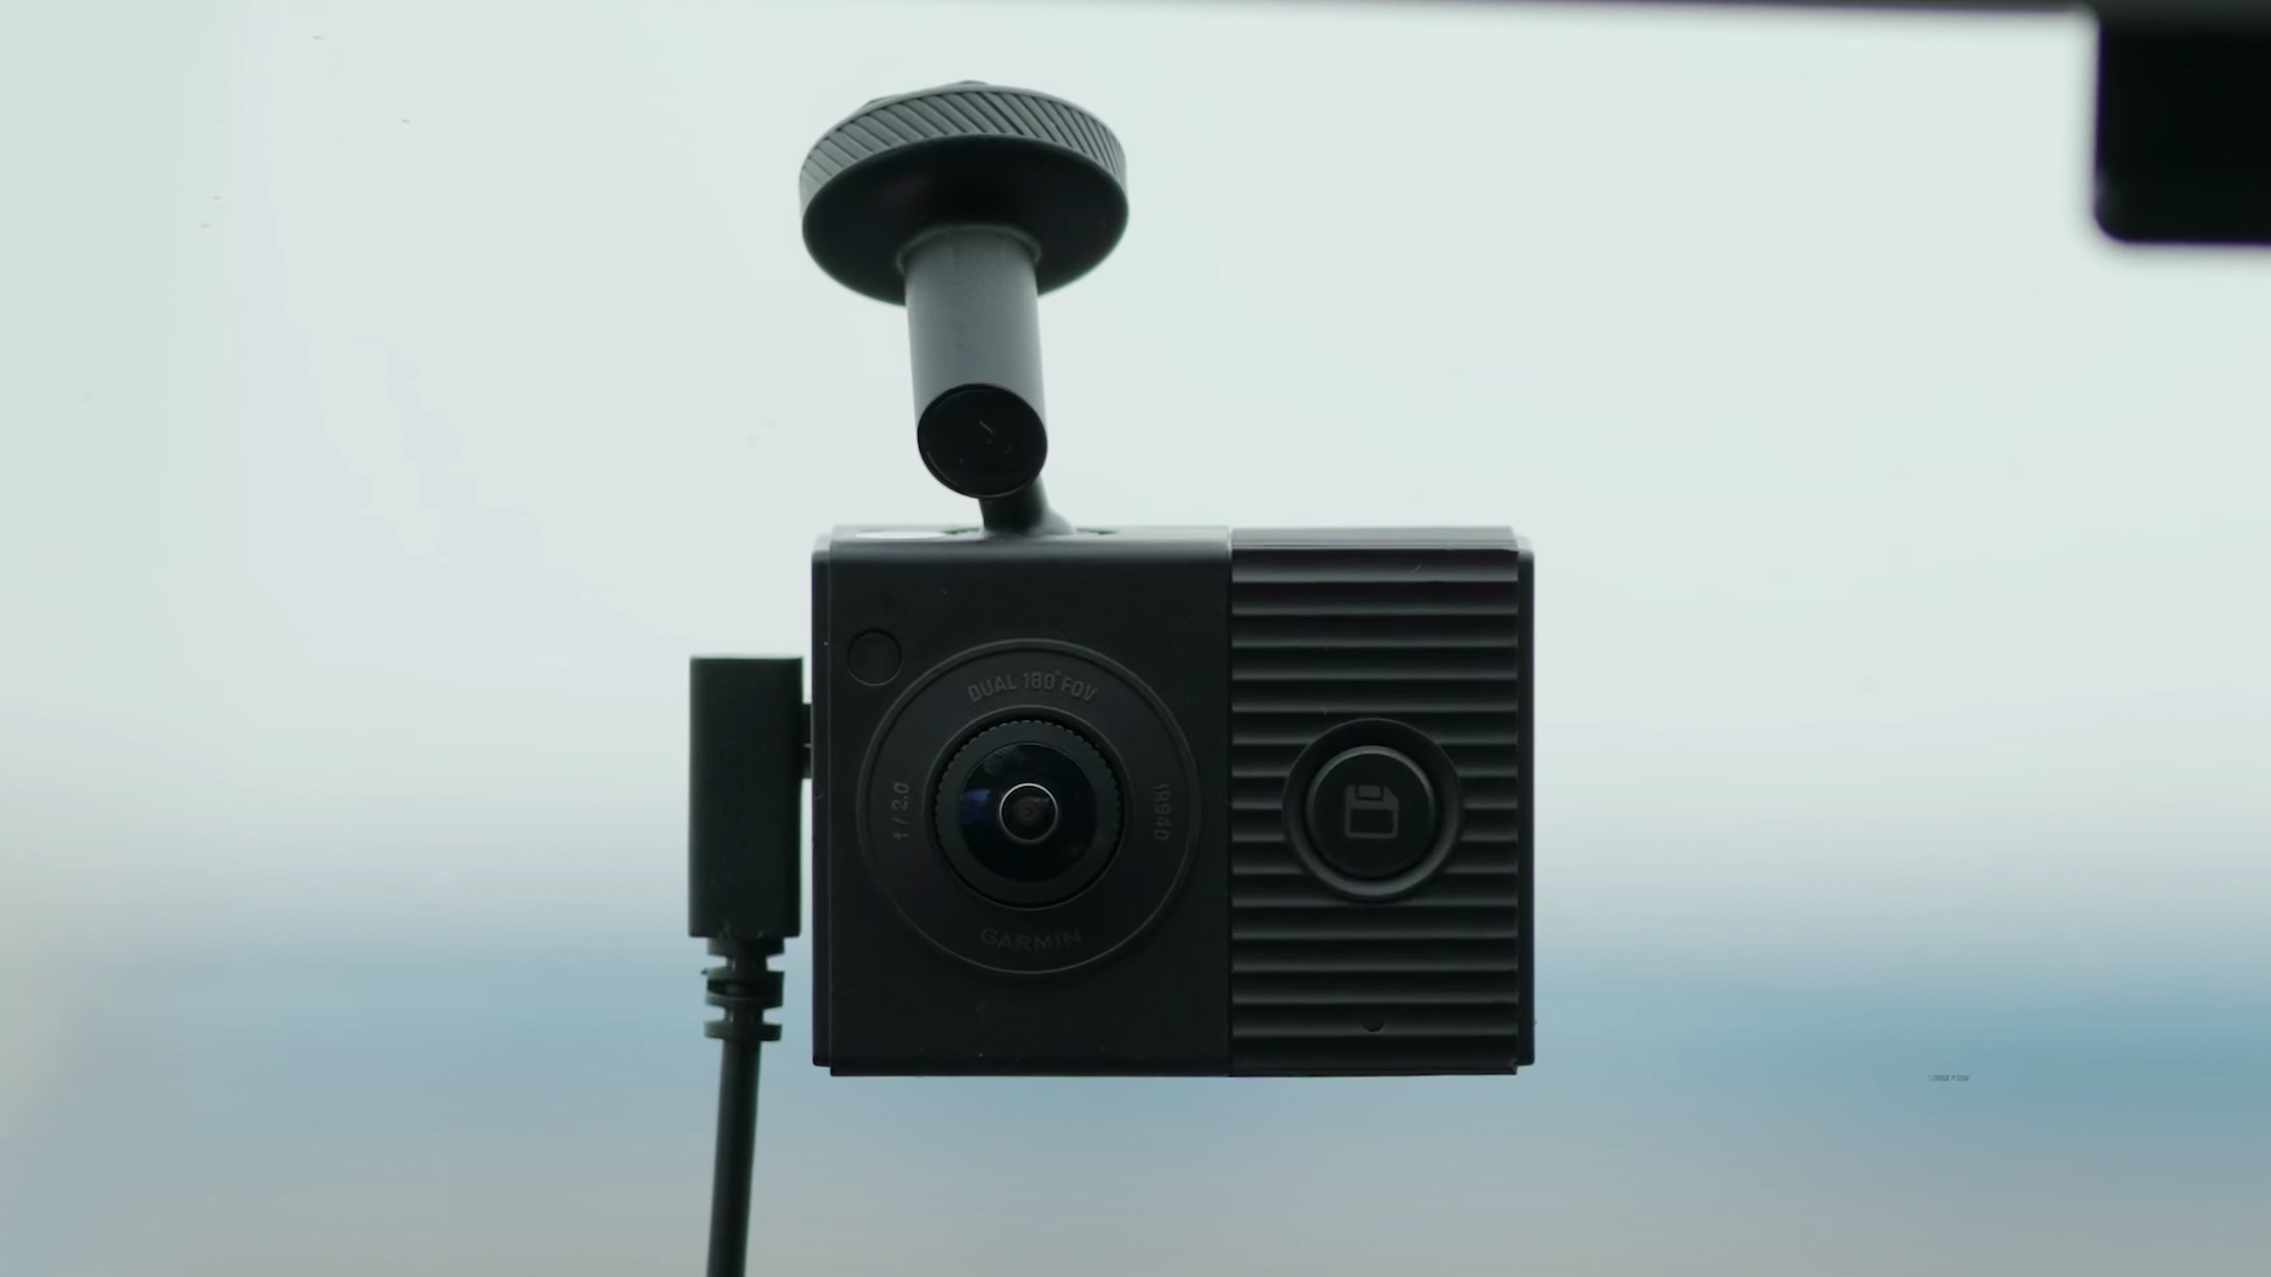 Best Buy: Garmin Tandem Front and Rear Camera Dash Cam 010-02259-00